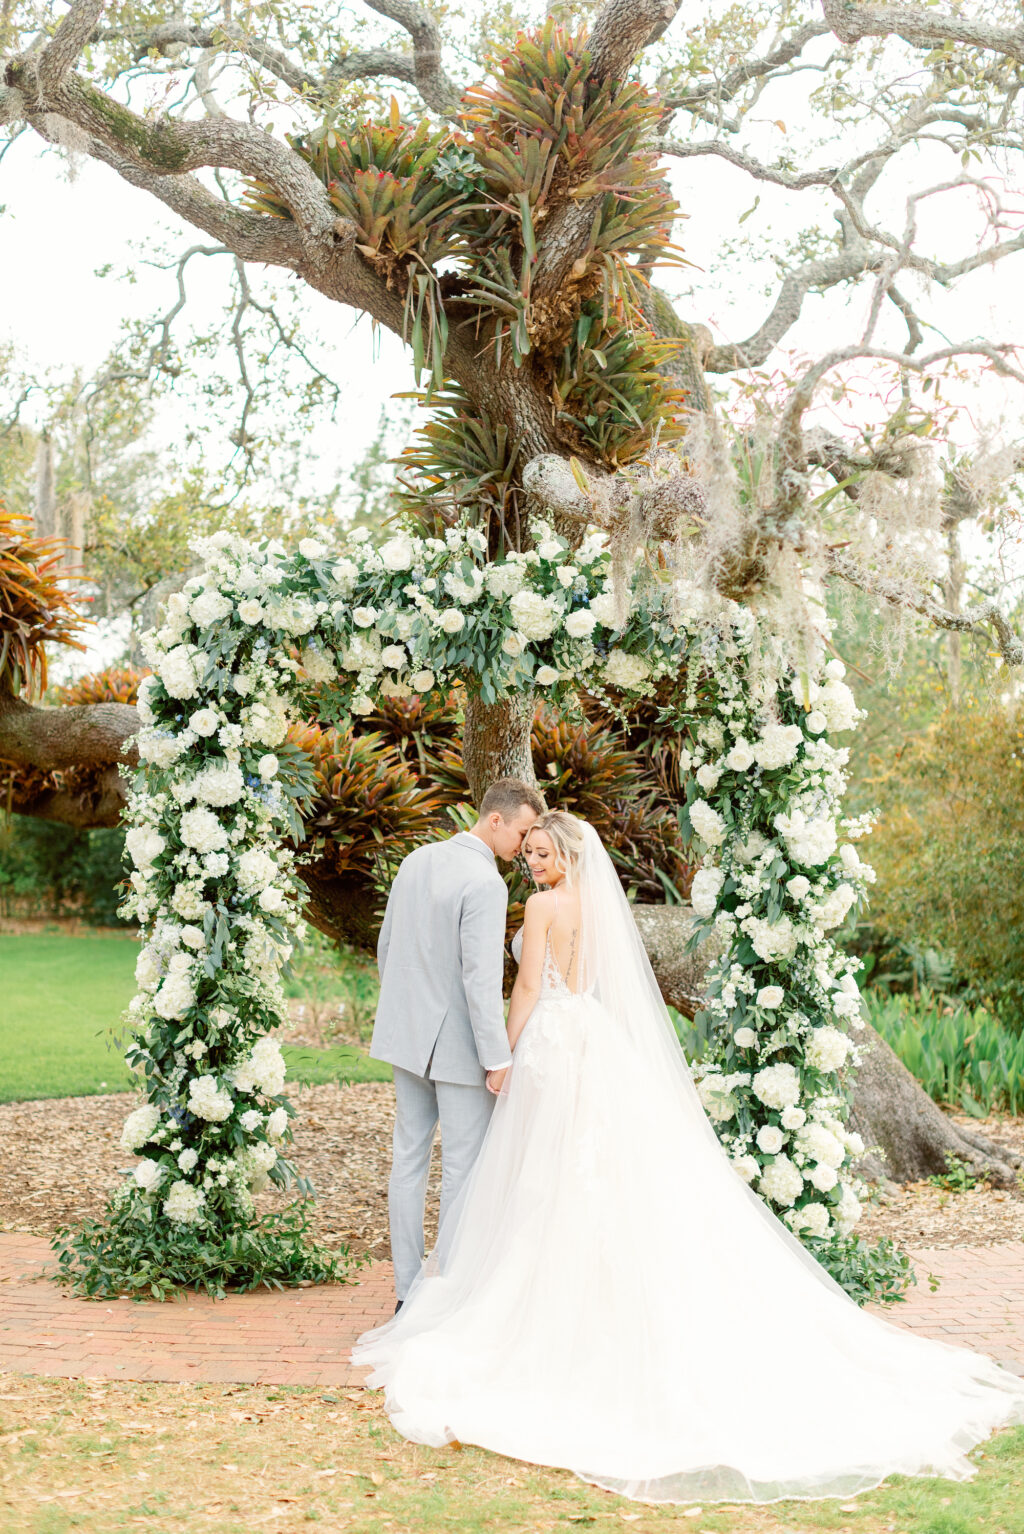 White and Greenery Spring Garden Floral Ceremony Arch | Romantic Bride and Groom Wedding Portrait | Sarasota Wedding Planner MDP Events | Florist Botanica International Design Studio